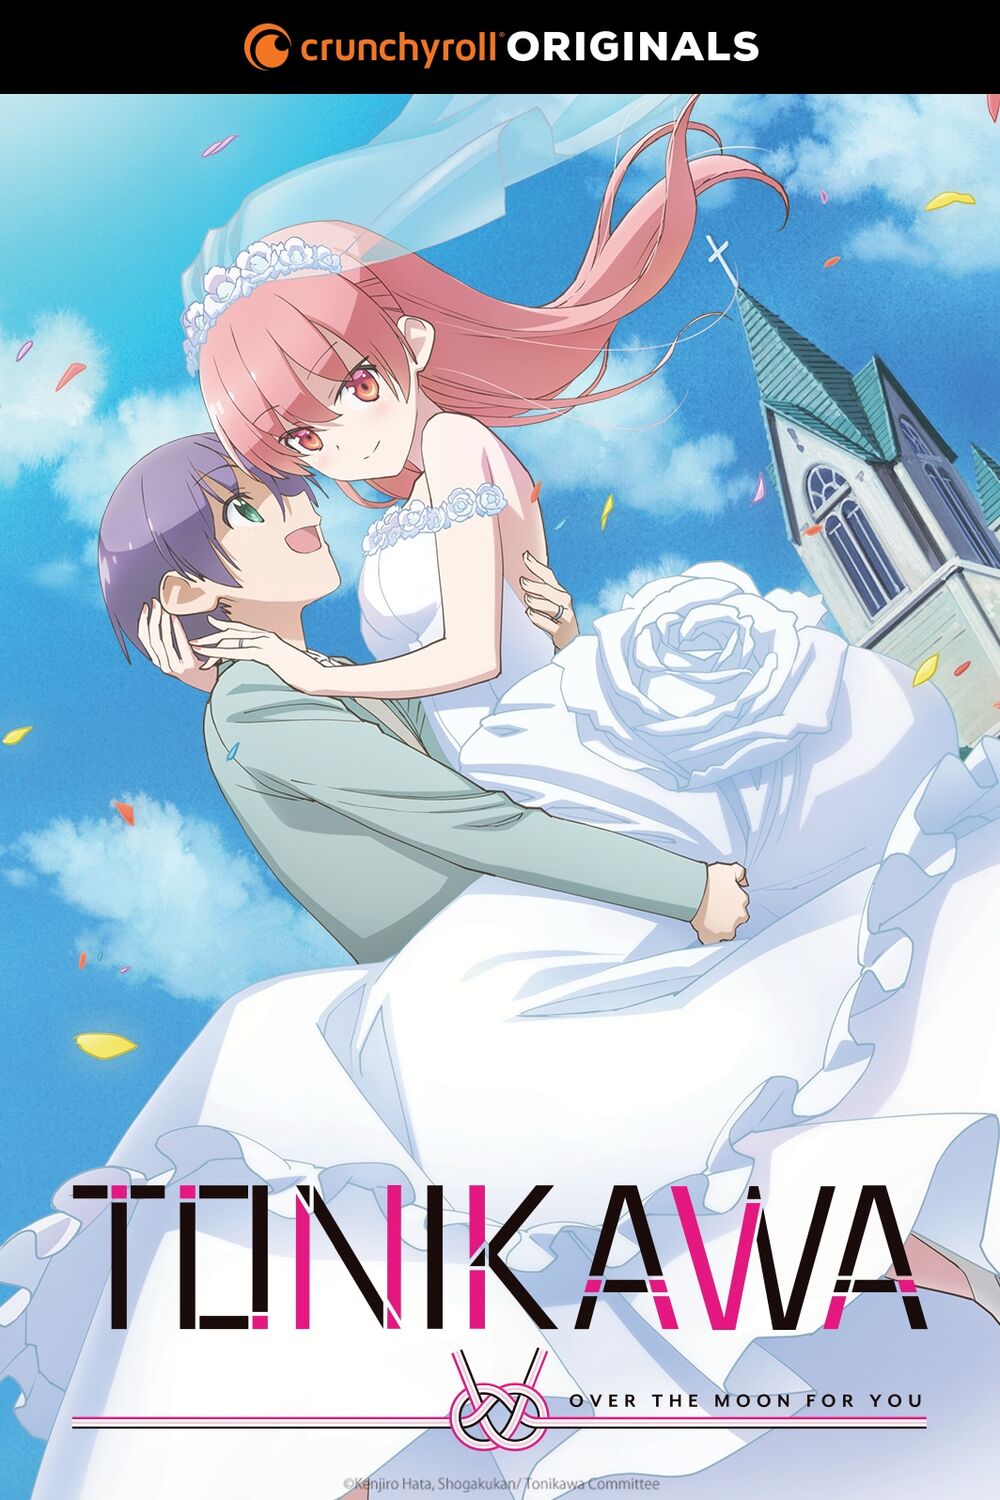 Tonikaku Kawaii season 2 release date, trailer, cast, and more news